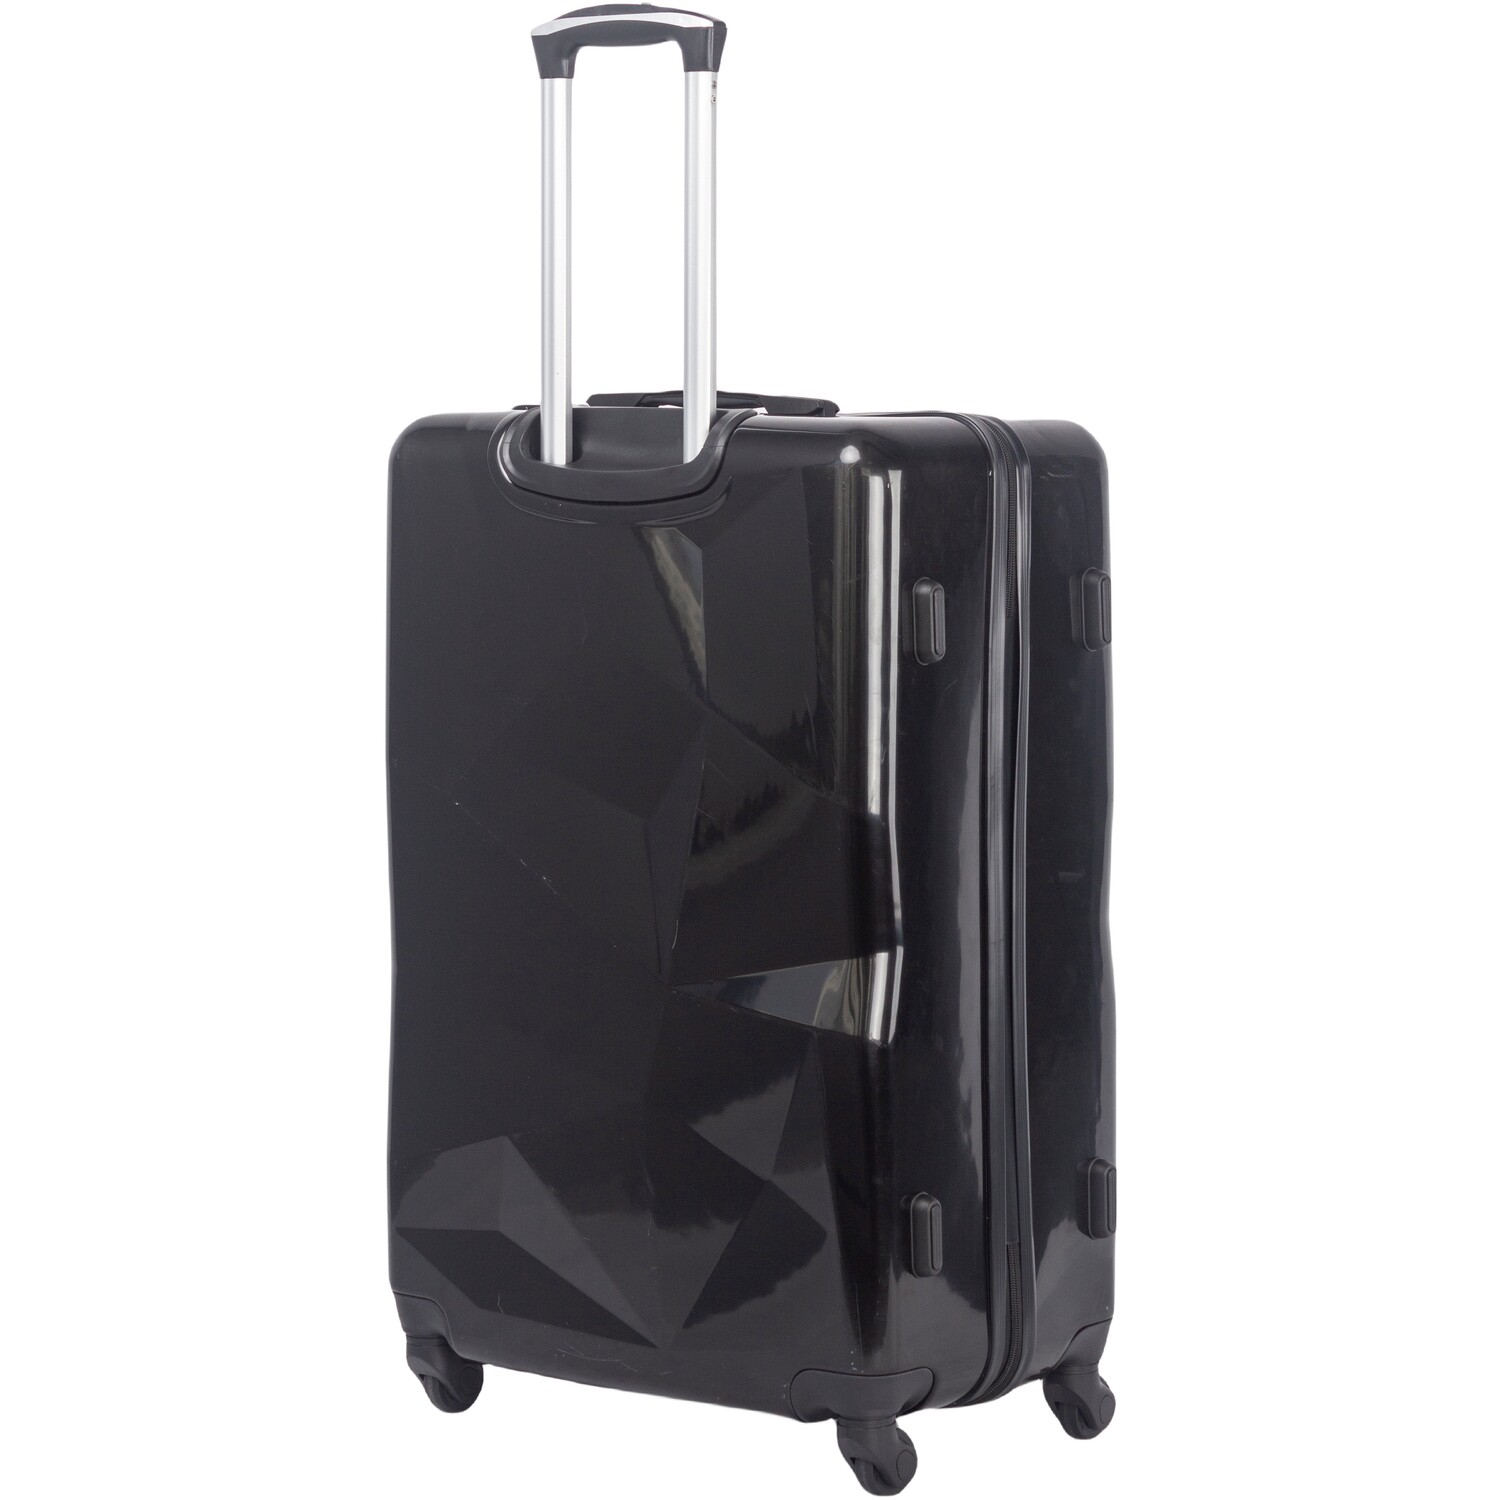 Swift Comet Suitcase - Black / Large Case Image 4